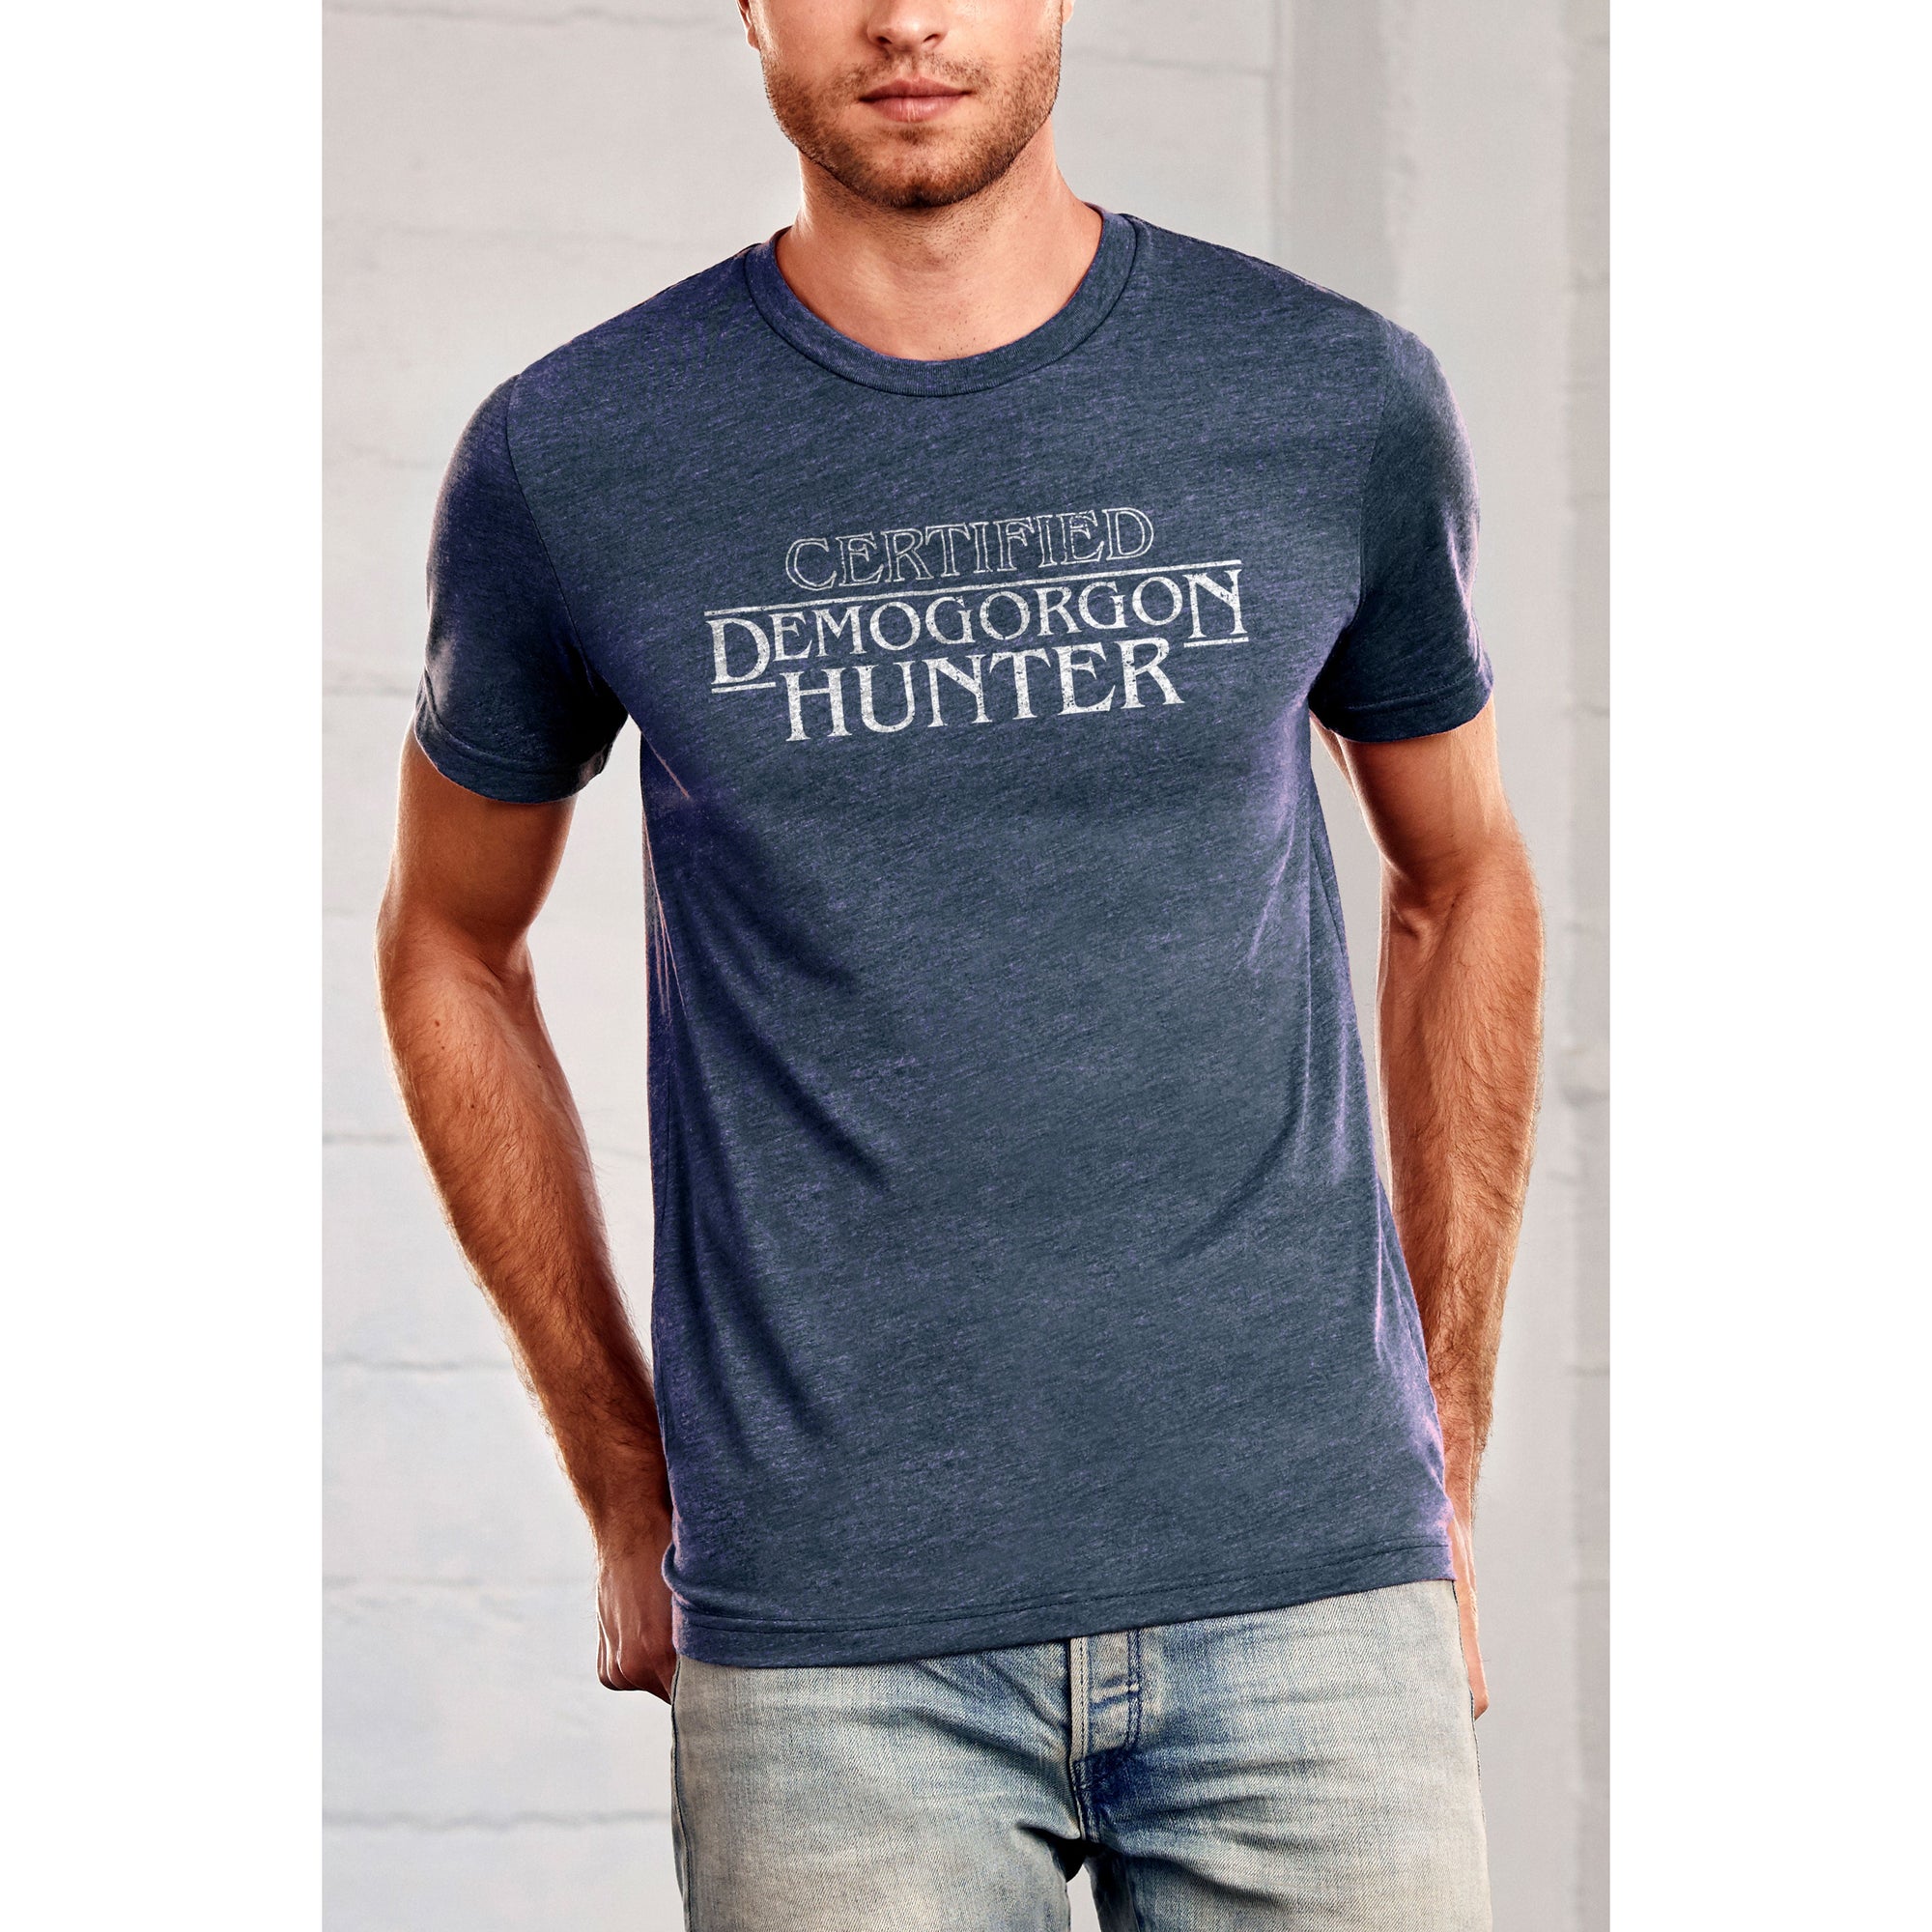 Certified Demogorgon Hunter Printed Graphic Men's Crew T-Shirt Vintage White Model Image